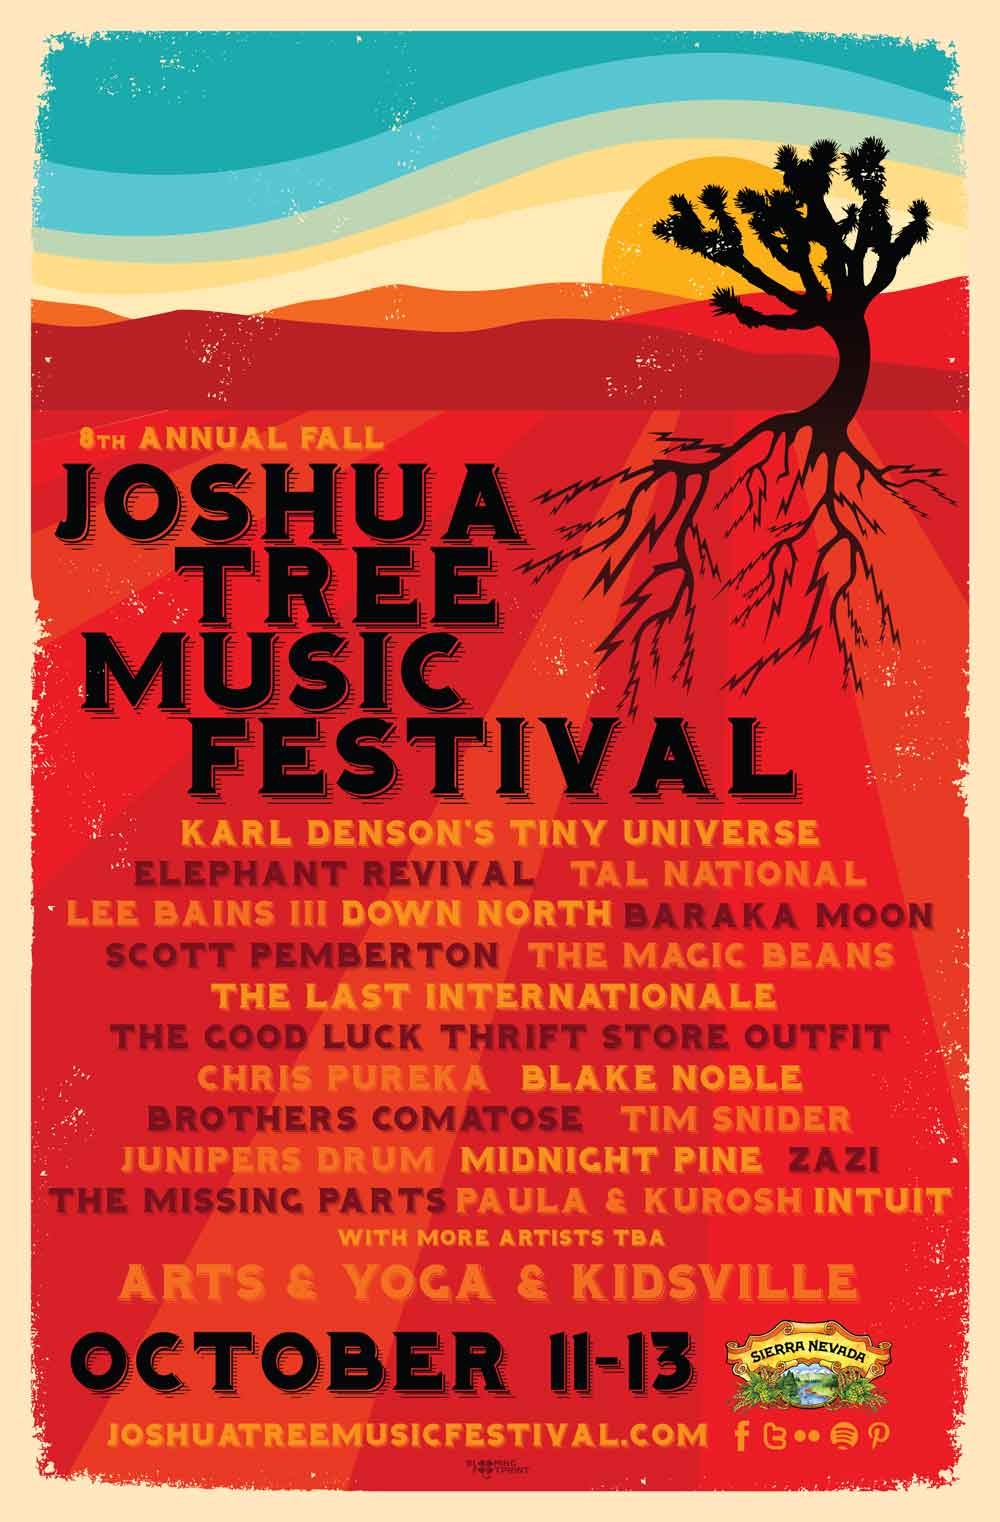 Fall Joshua Tree Music Festival 2013 Lineup poster image